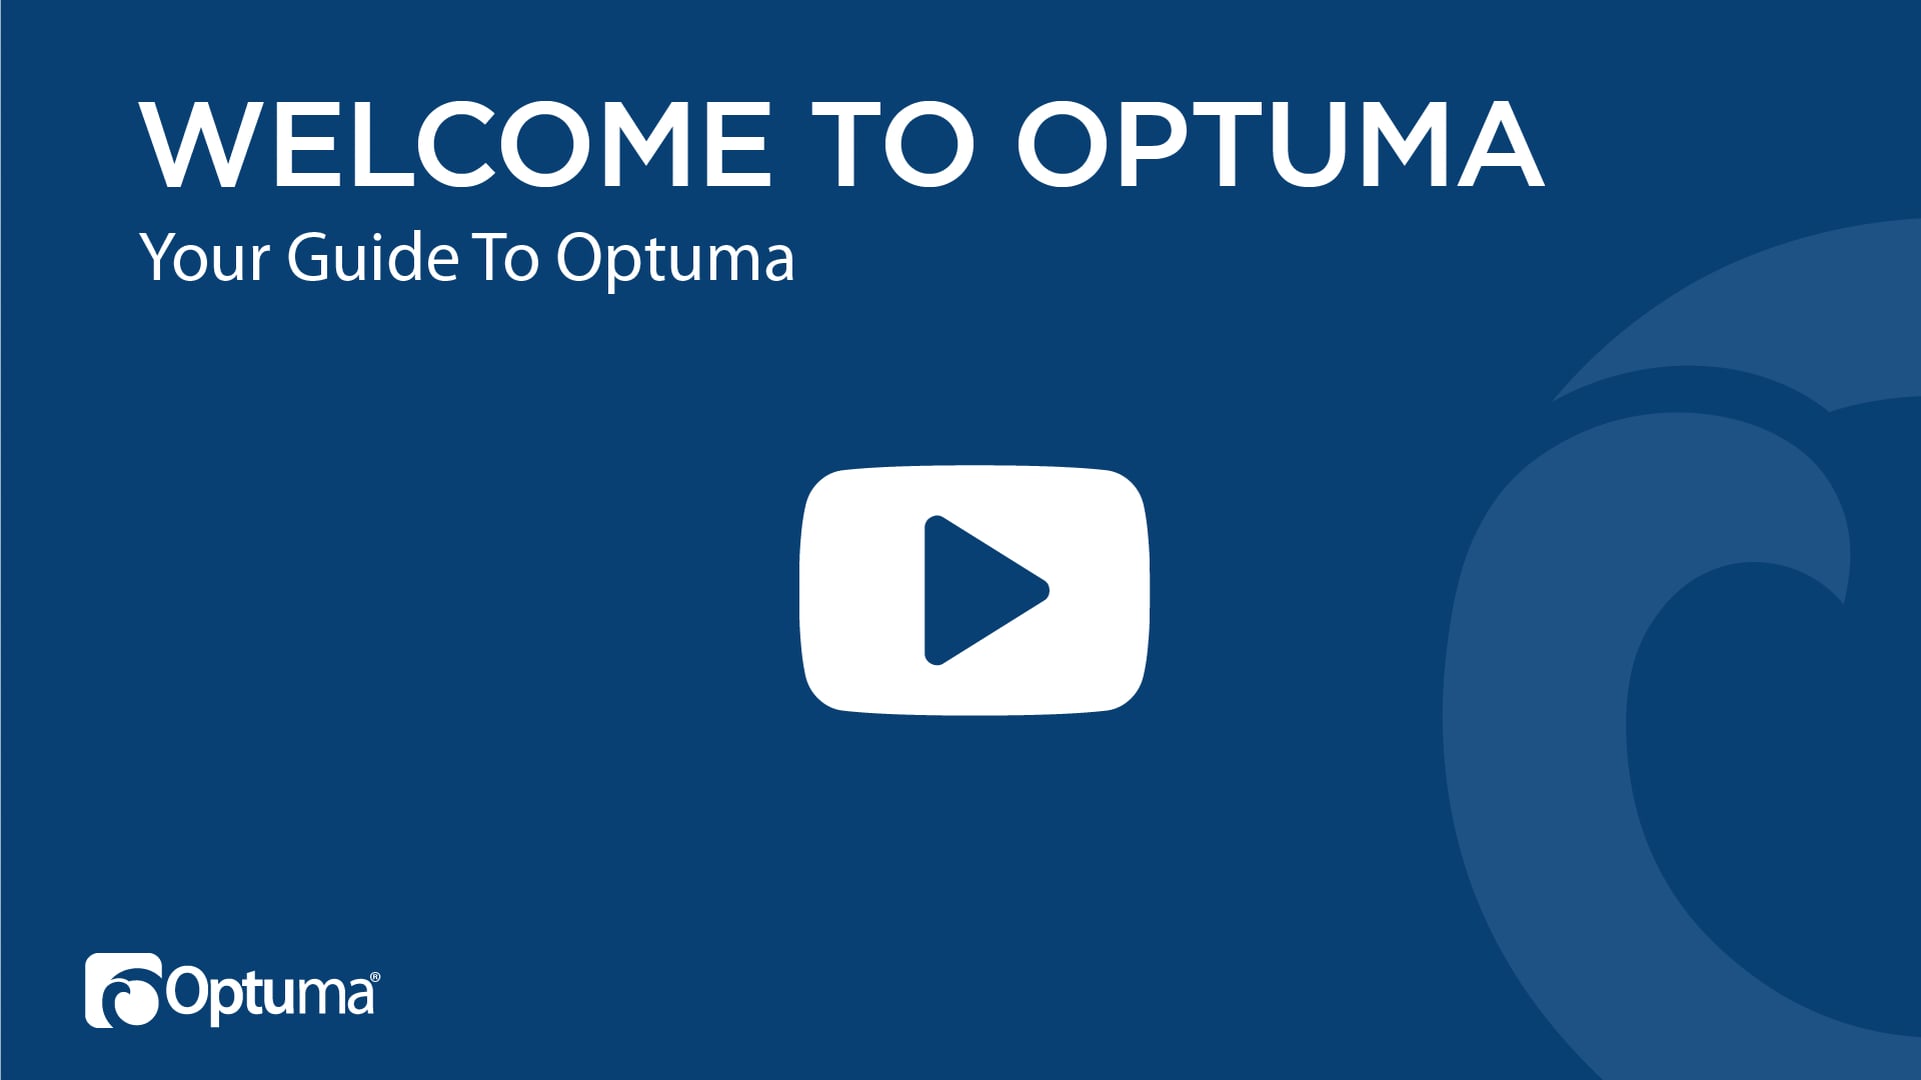 Welcome to Optuma